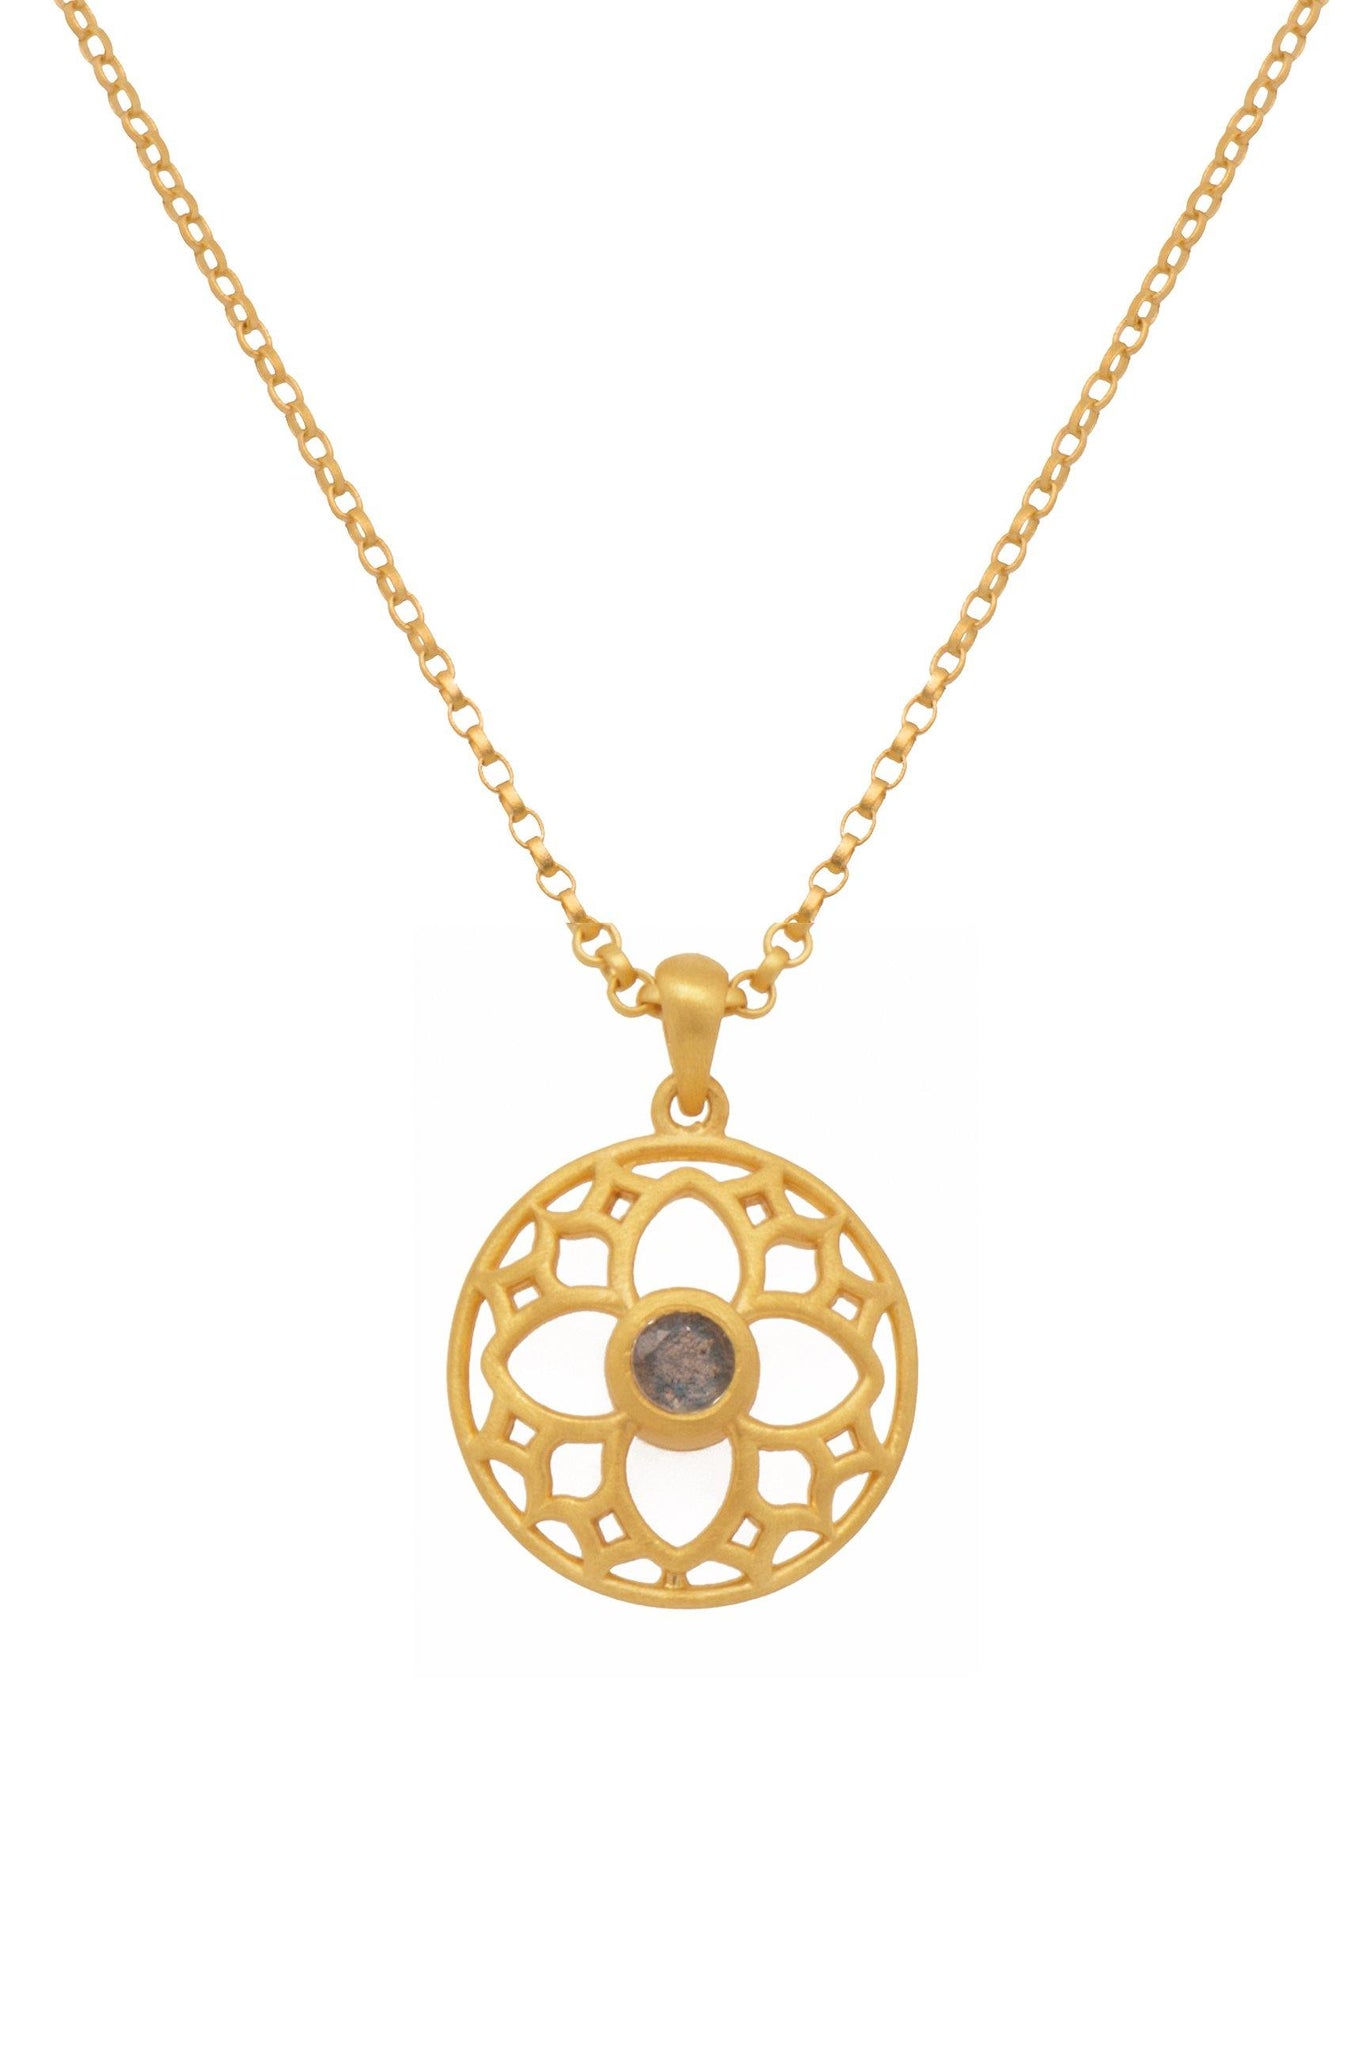 JOYFUL CIRCLE PENDANT 20MM LABRODORITE 24K GOLD VERMEIL - Joyla Jewelry